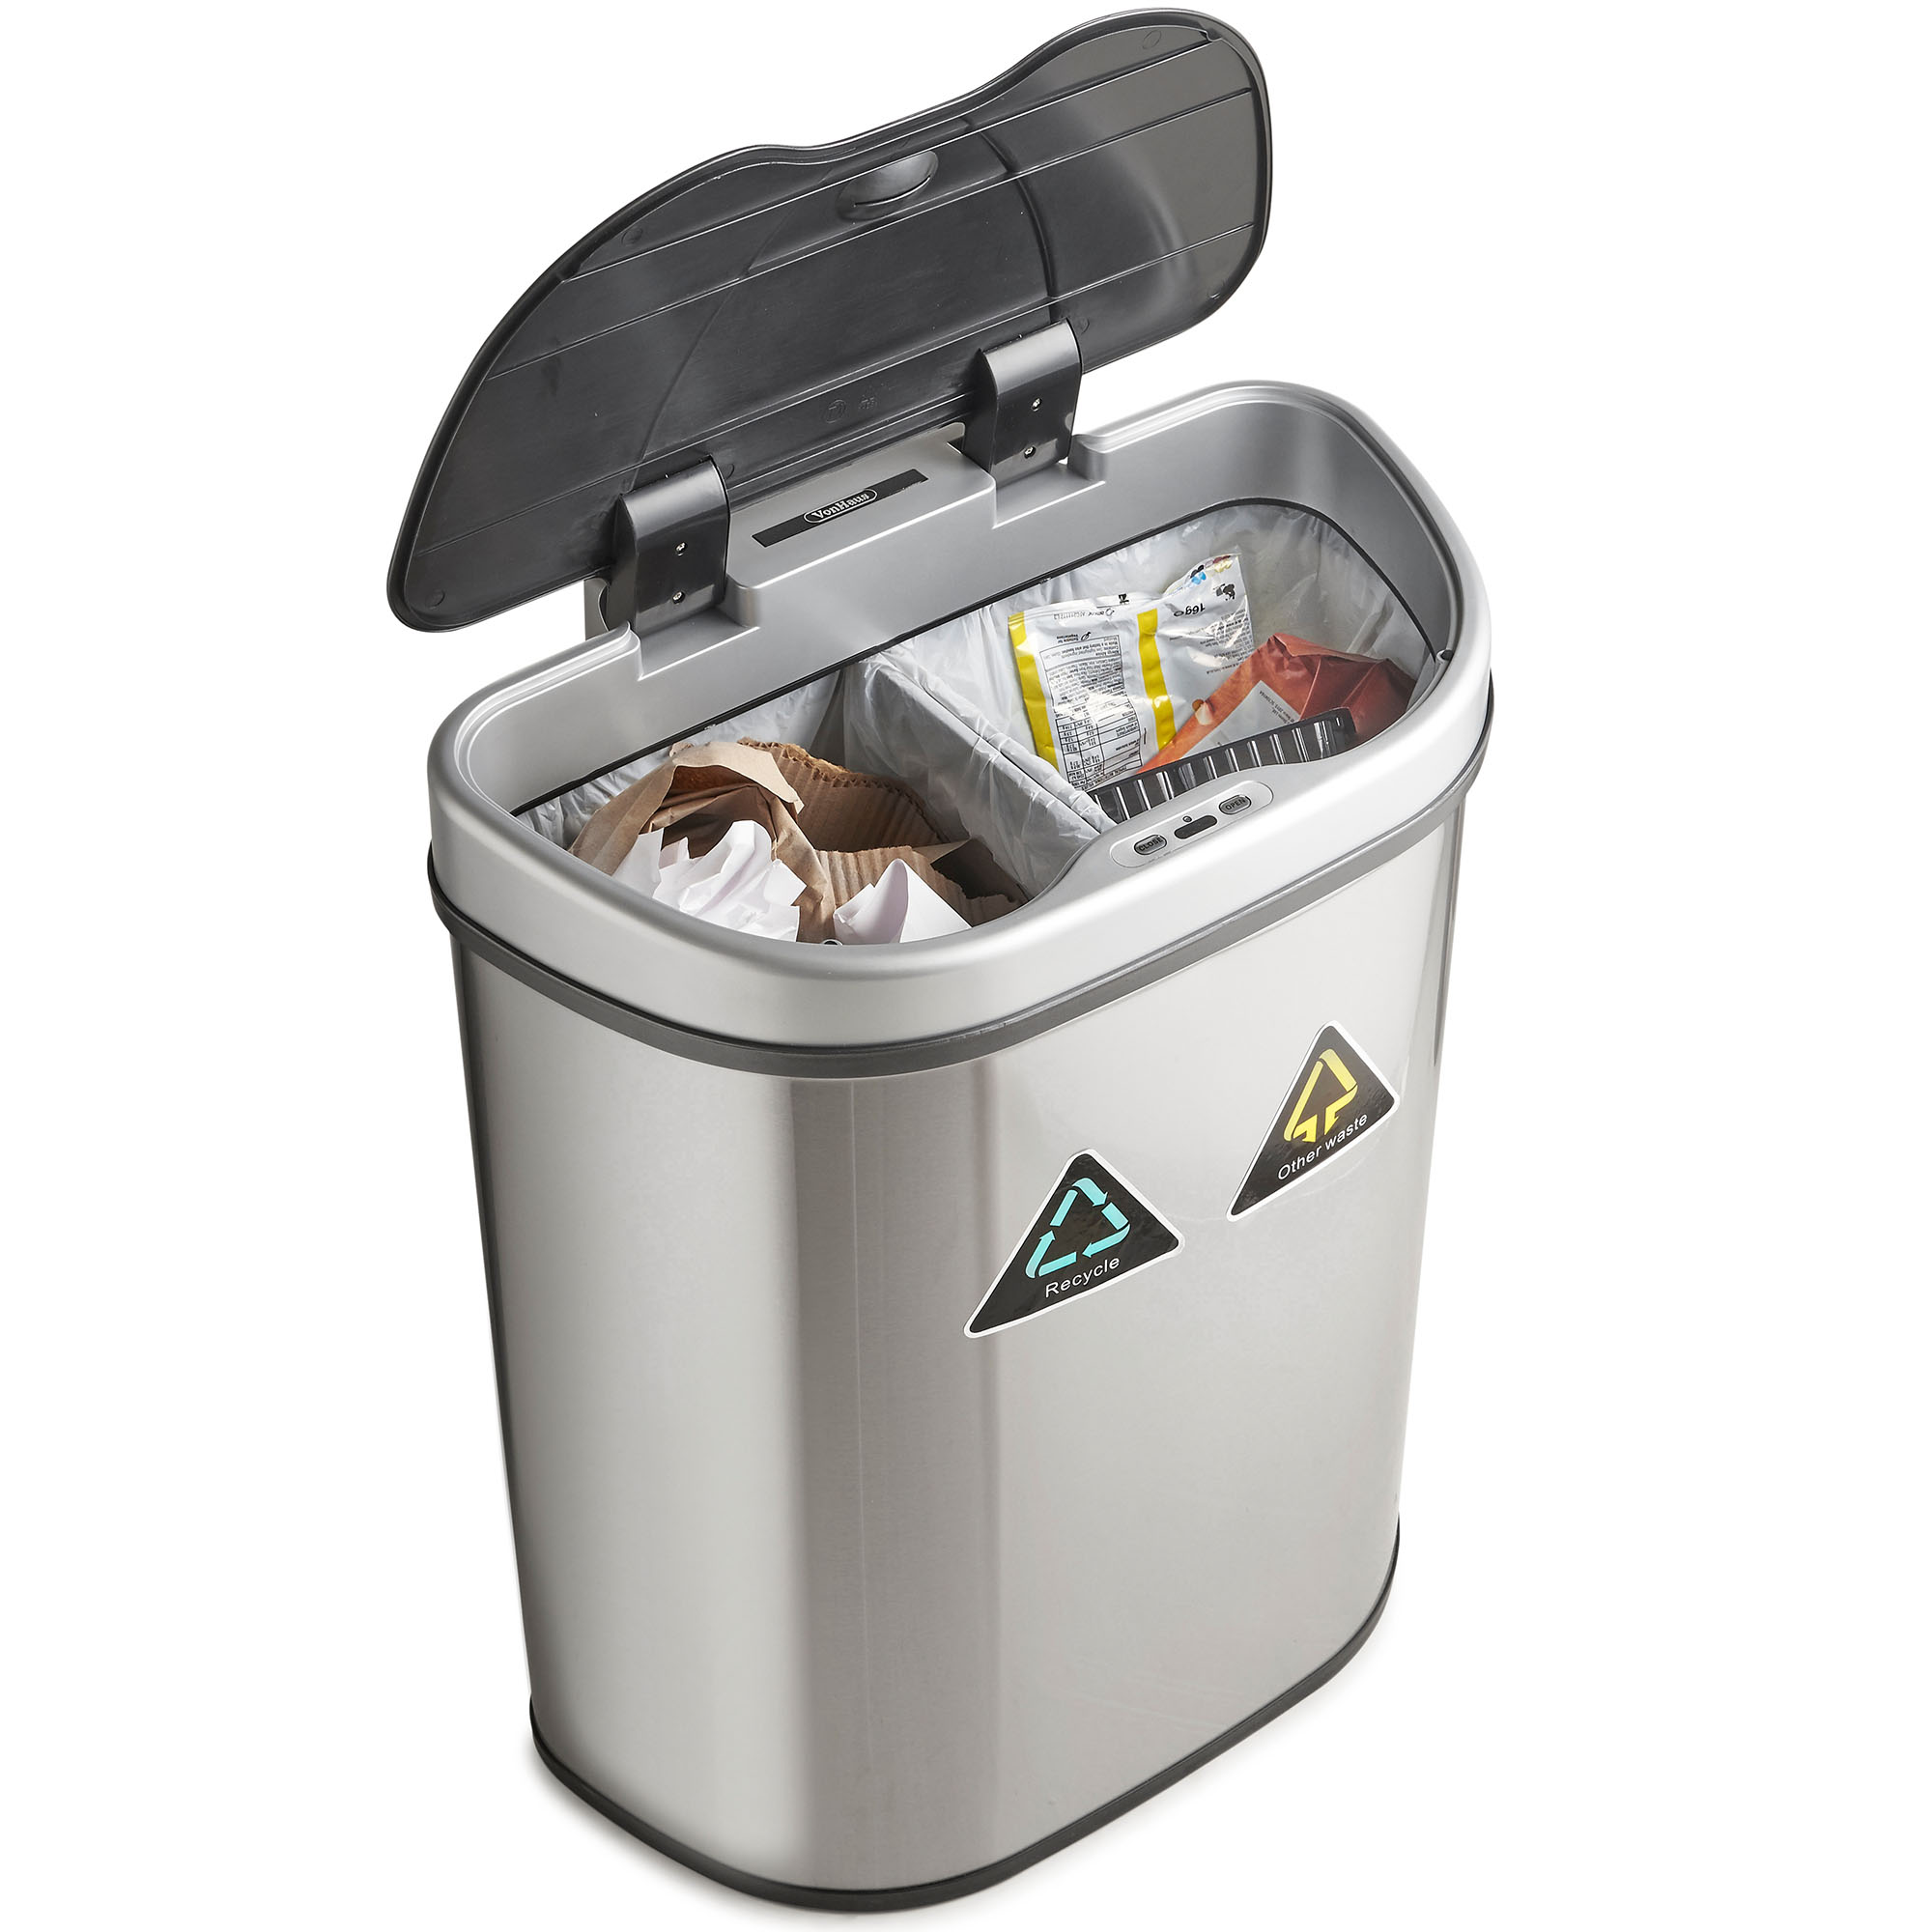 VonHaus 70L Recycling Sensor Bin for Kitchen Waste 2 Recycle